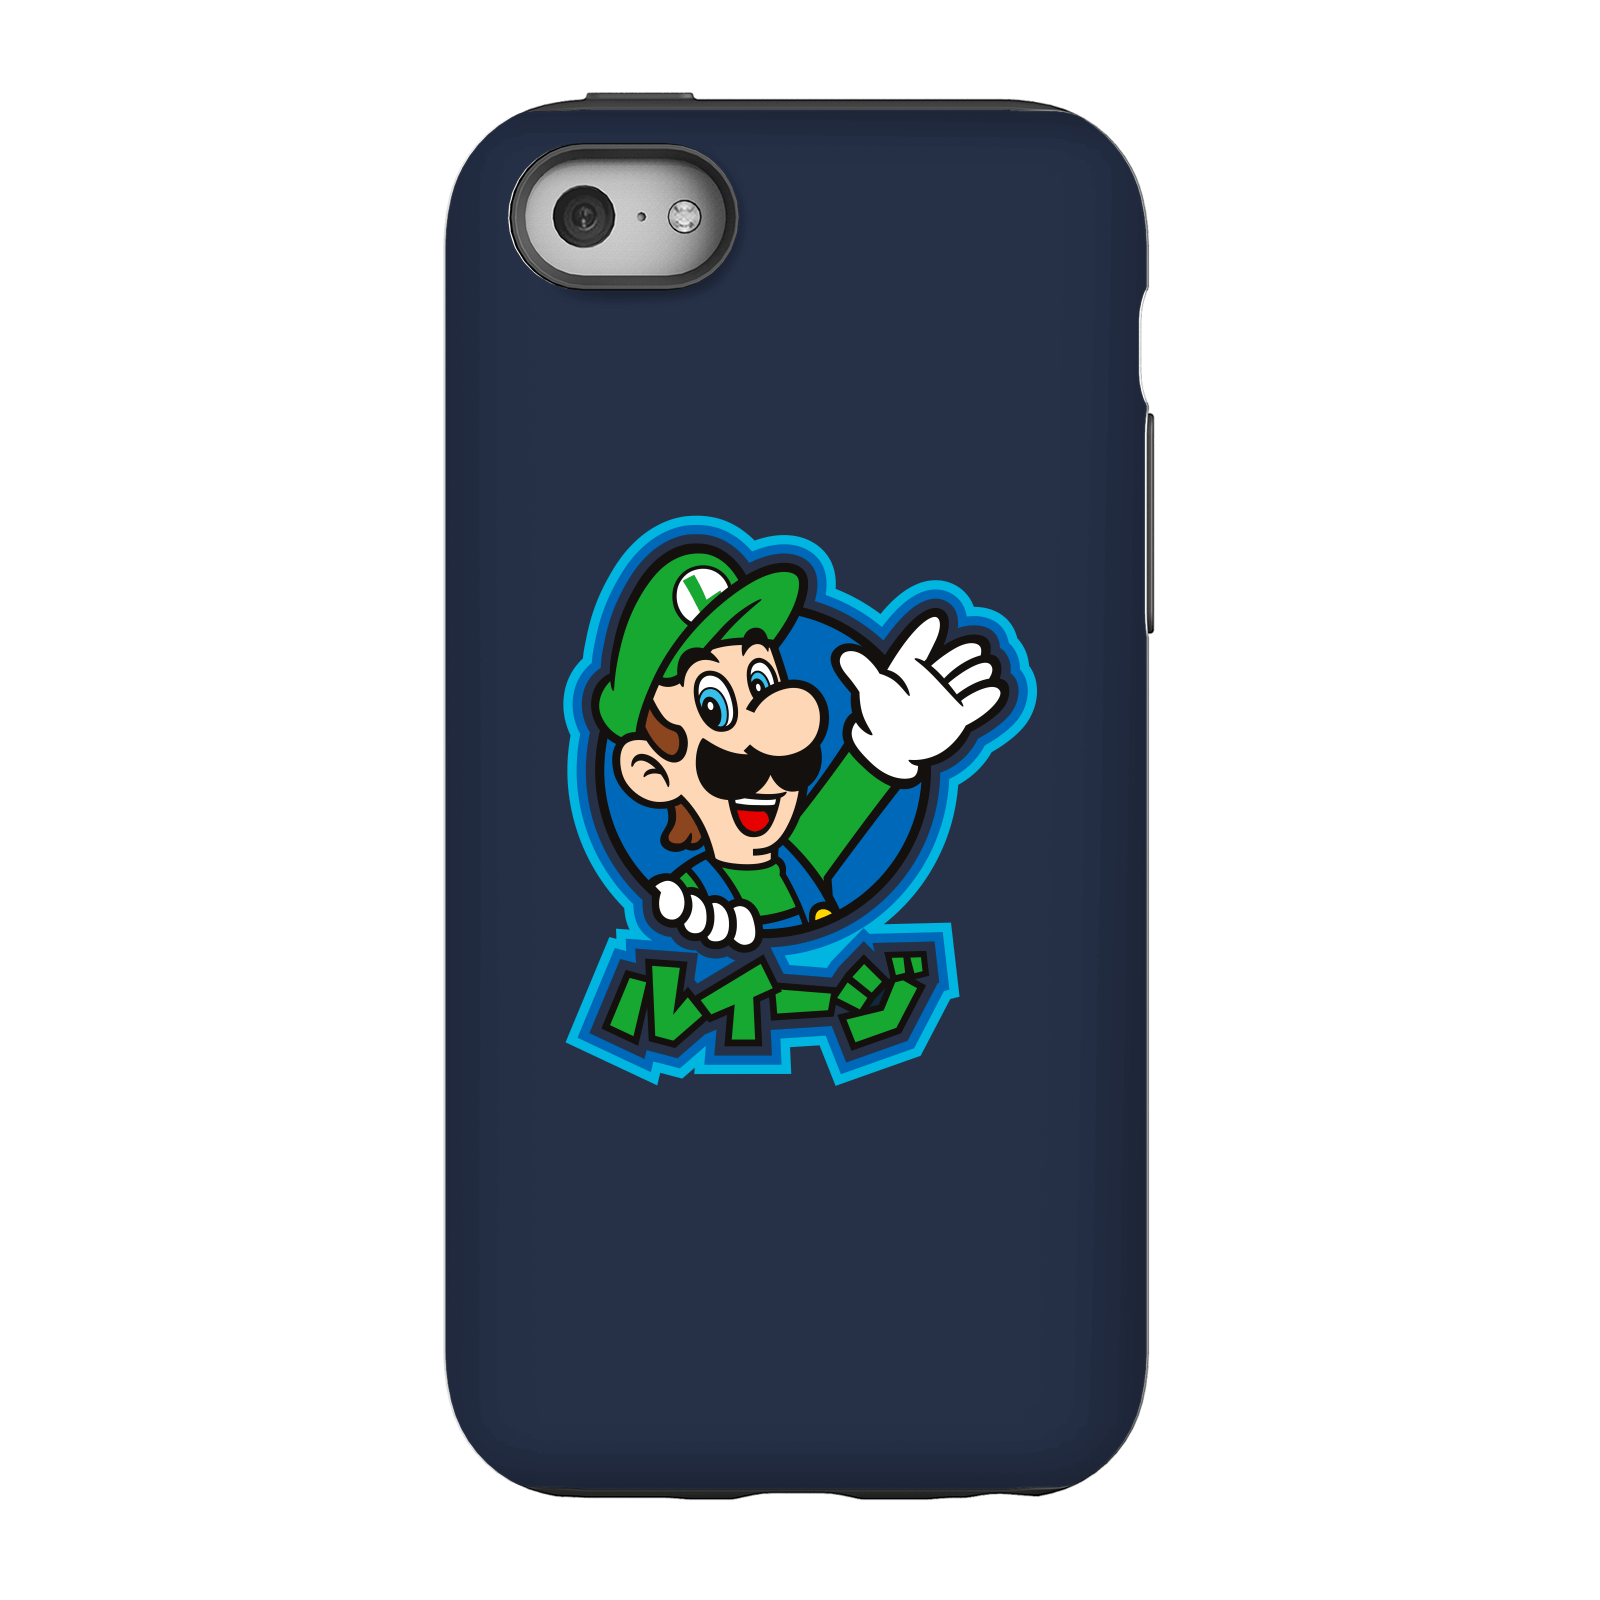 Nintendo Super Mario Luigi Kanji Phone Case - iPhone 5C - Tough Case - Matte